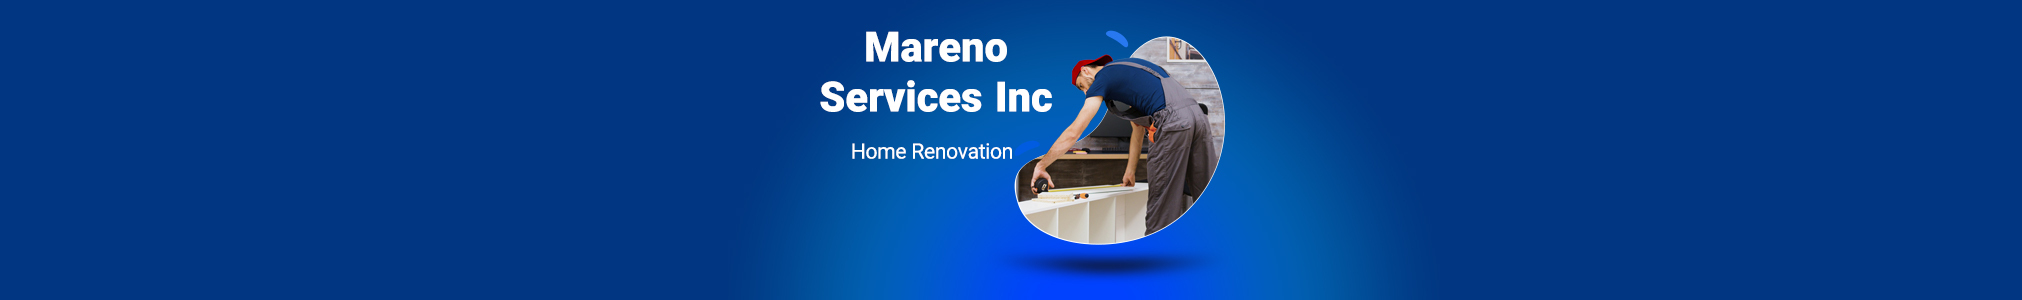 Mareno Services Inc